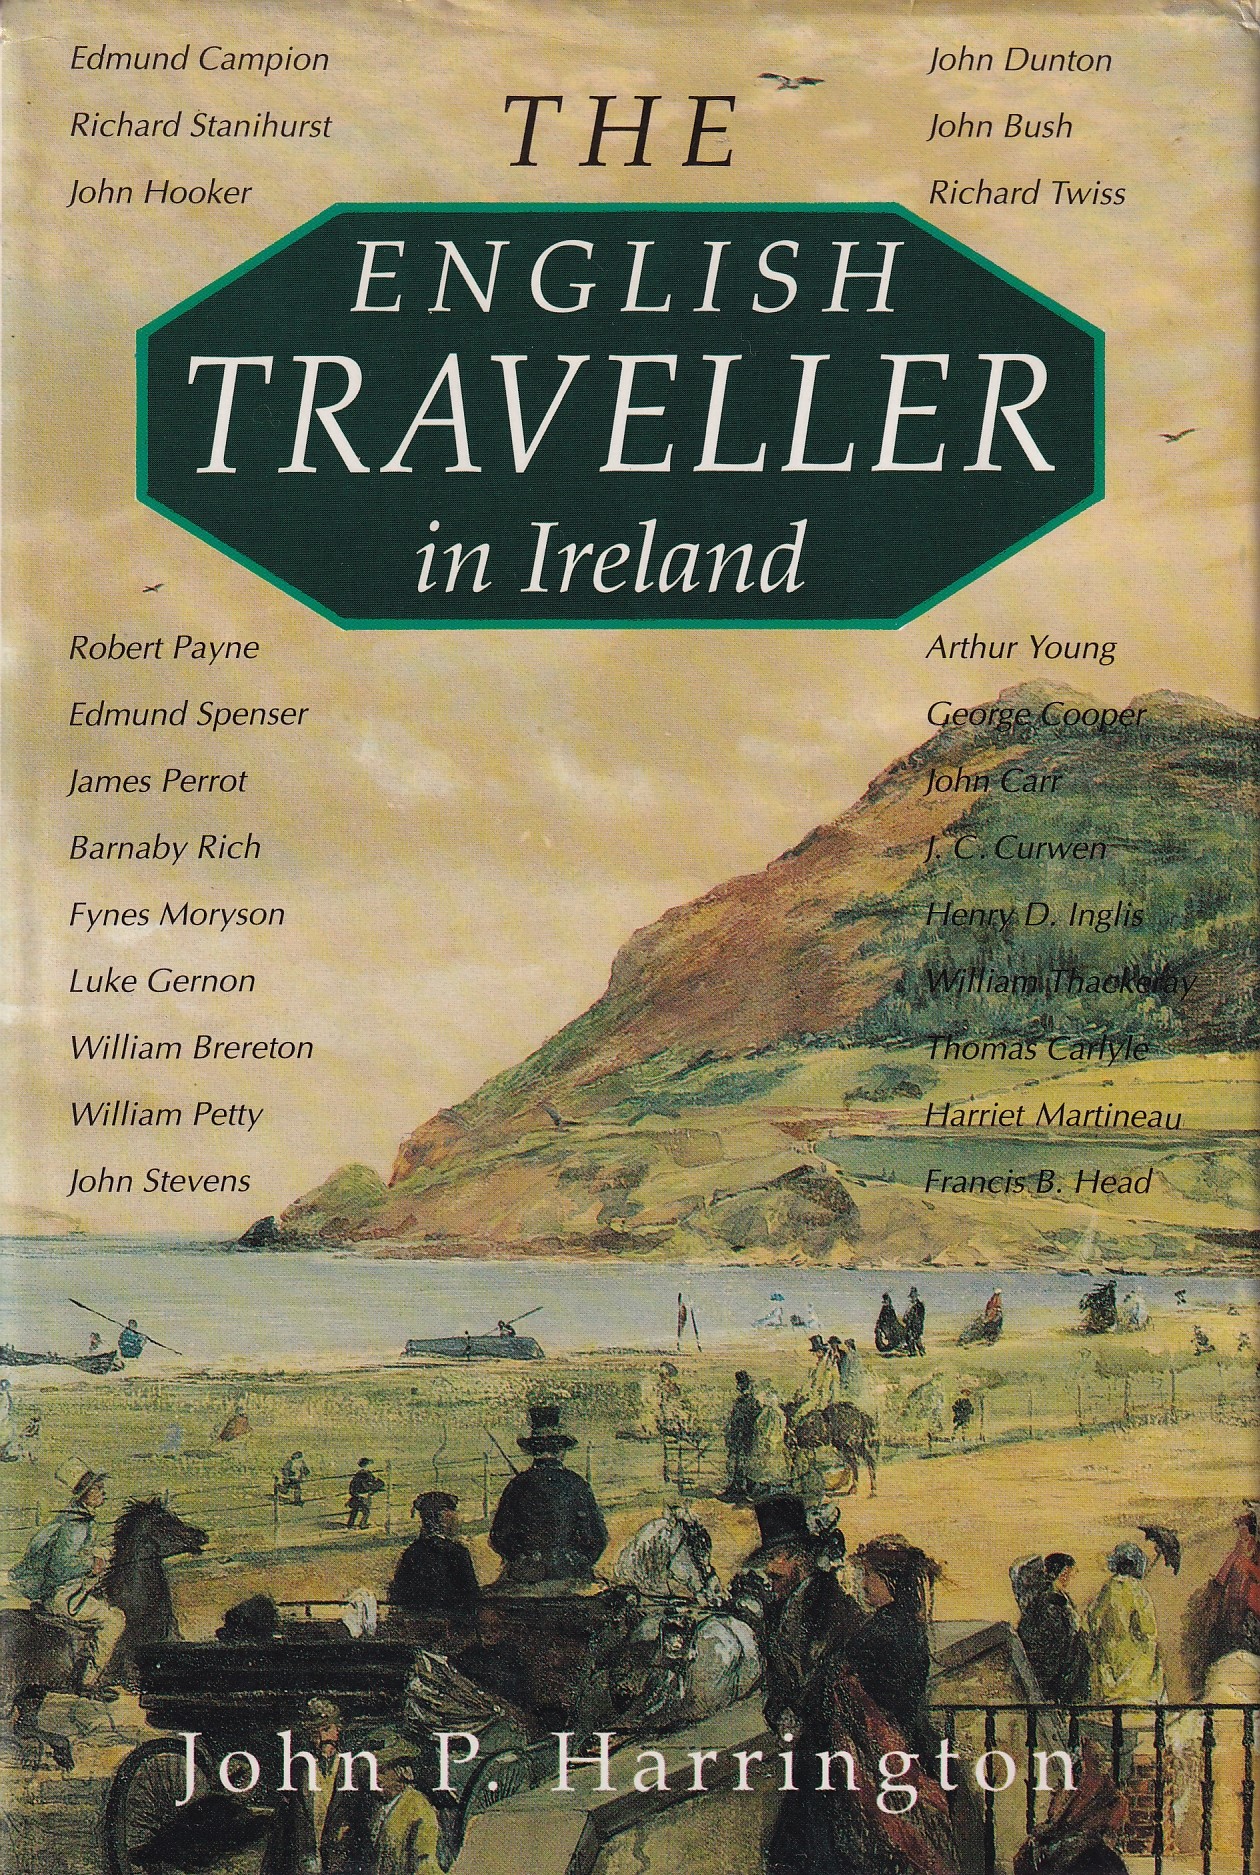 The English Traveller in Ireland by John P. Harrington (ed.)